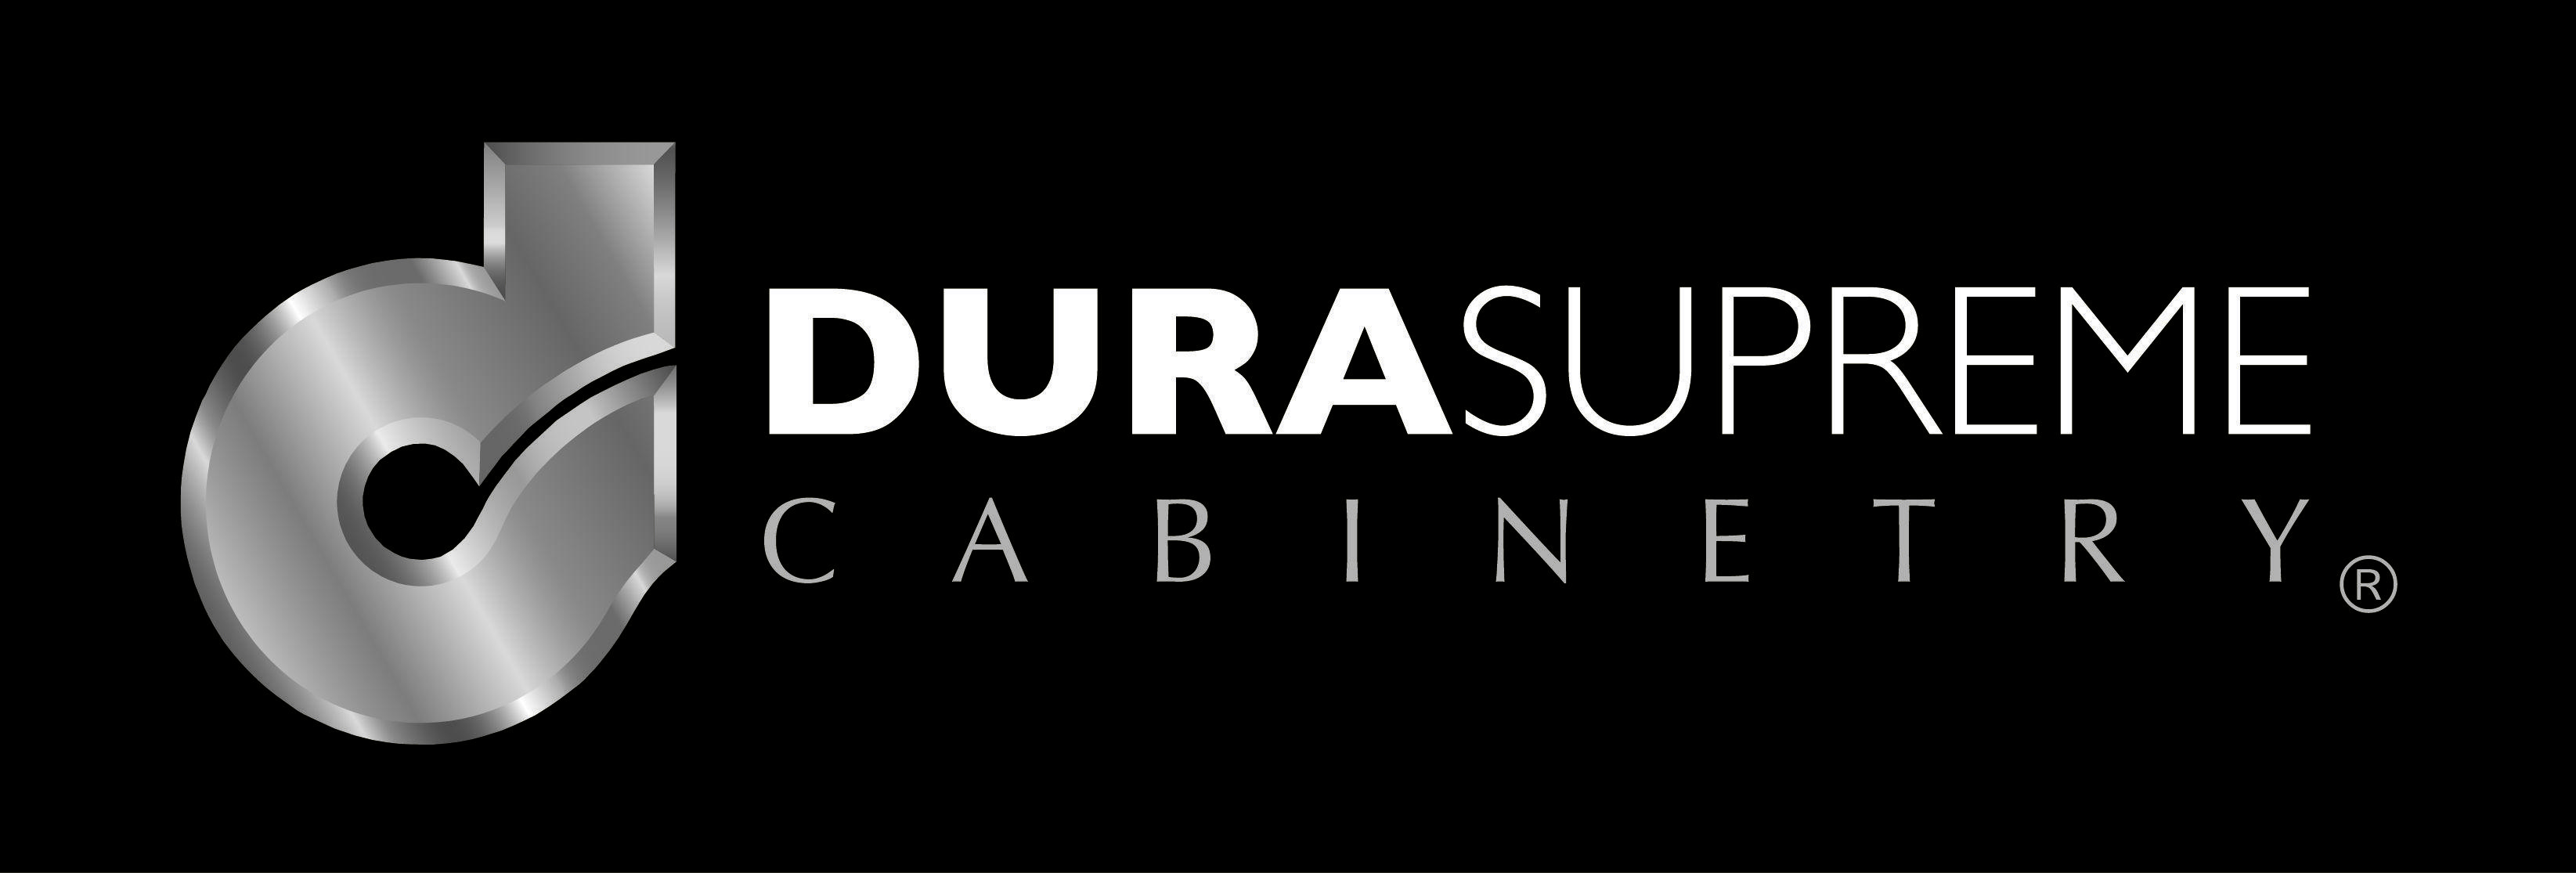 Dura Supreme Logo - Logo Files. Dura Supreme Cabinetry. Dura Supreme Cabinetry